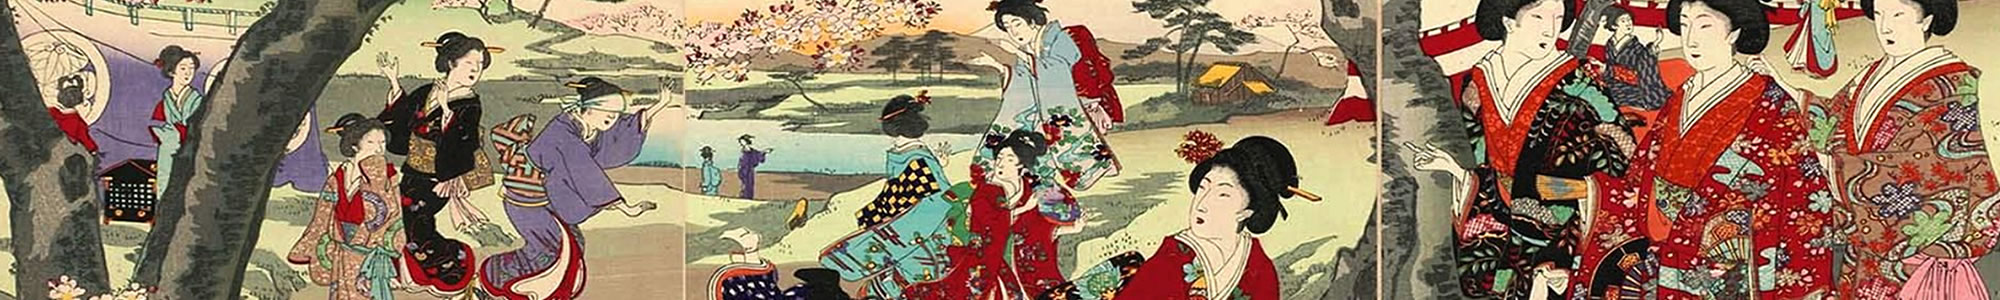 Bento Box History - Hanami Cherry Blossom Viewing